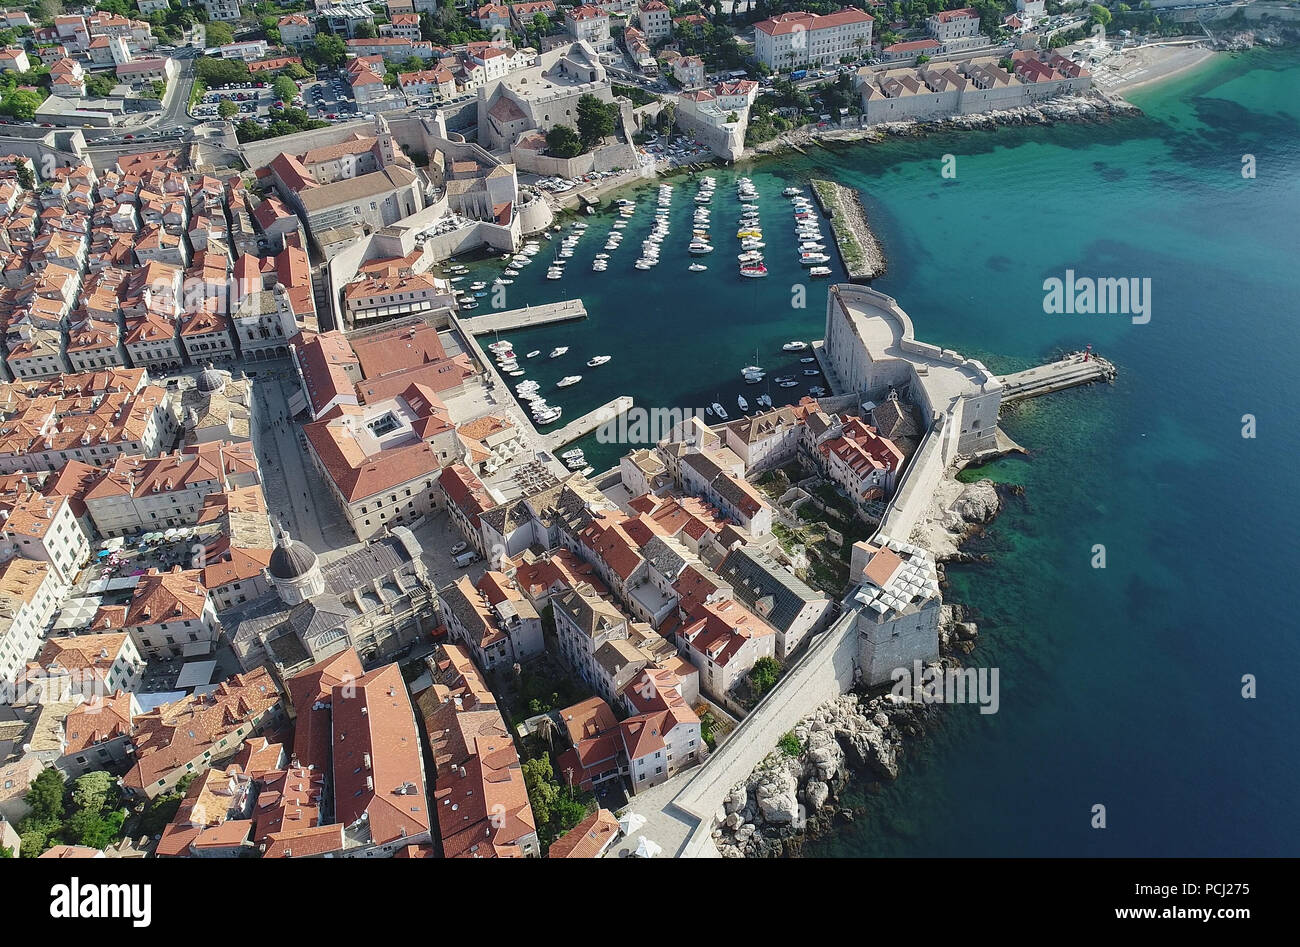 Town of Dubrovnik city walls and harbor UNESCO world heritage site aerial view, Dalmatia region of Croatia Stock Photo